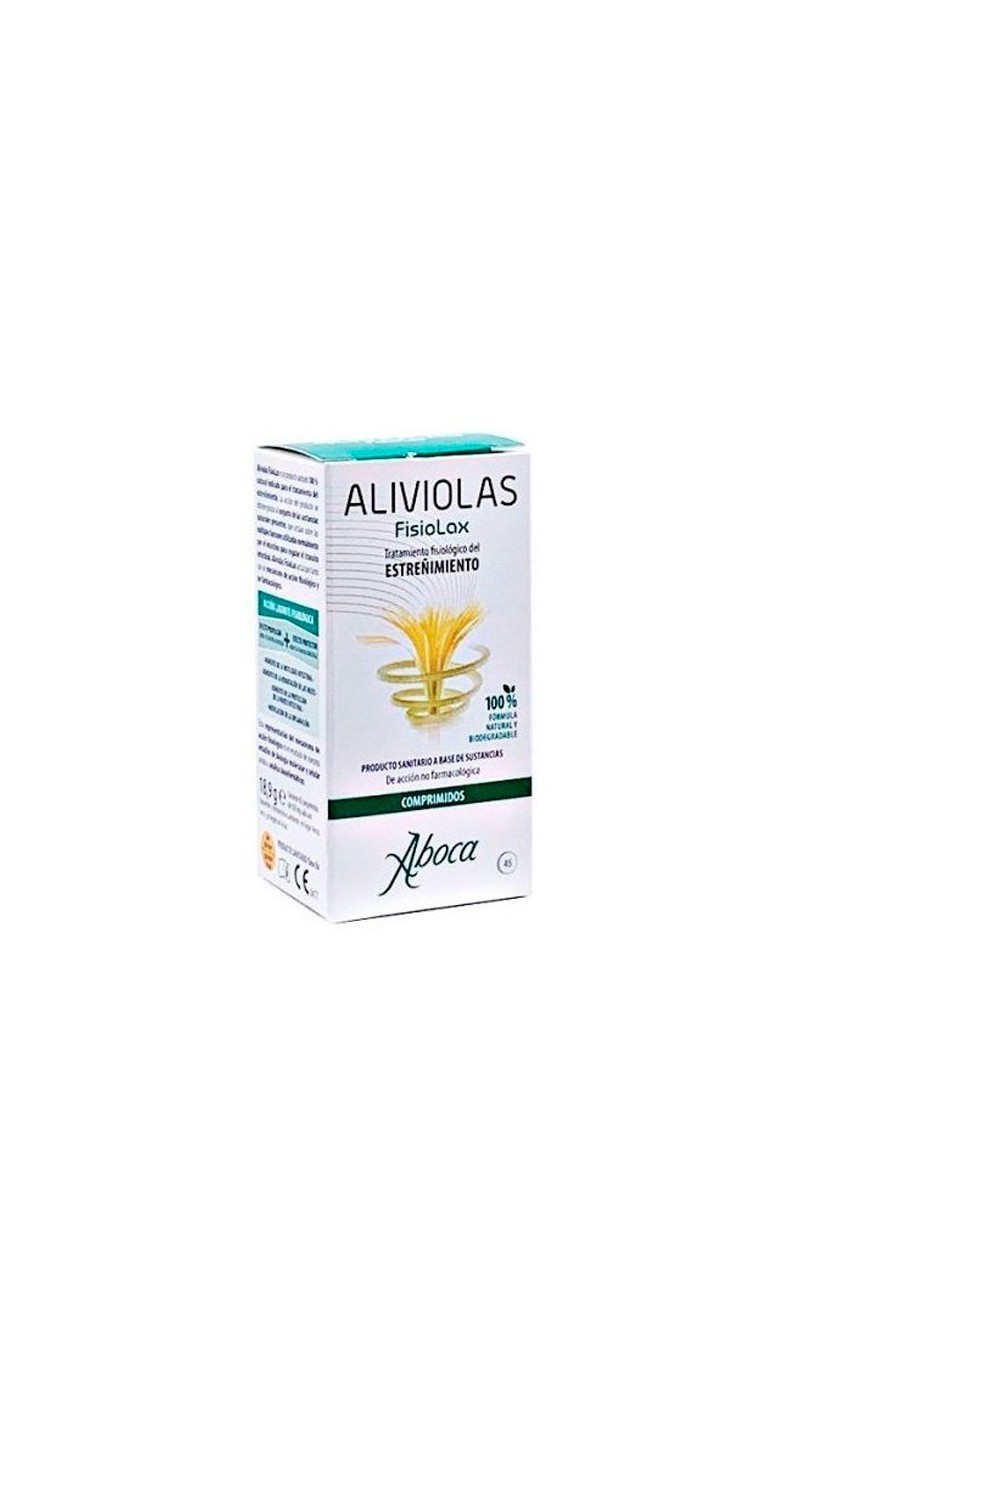 Aboca Aliviolas Fisiolax 27 Tablets